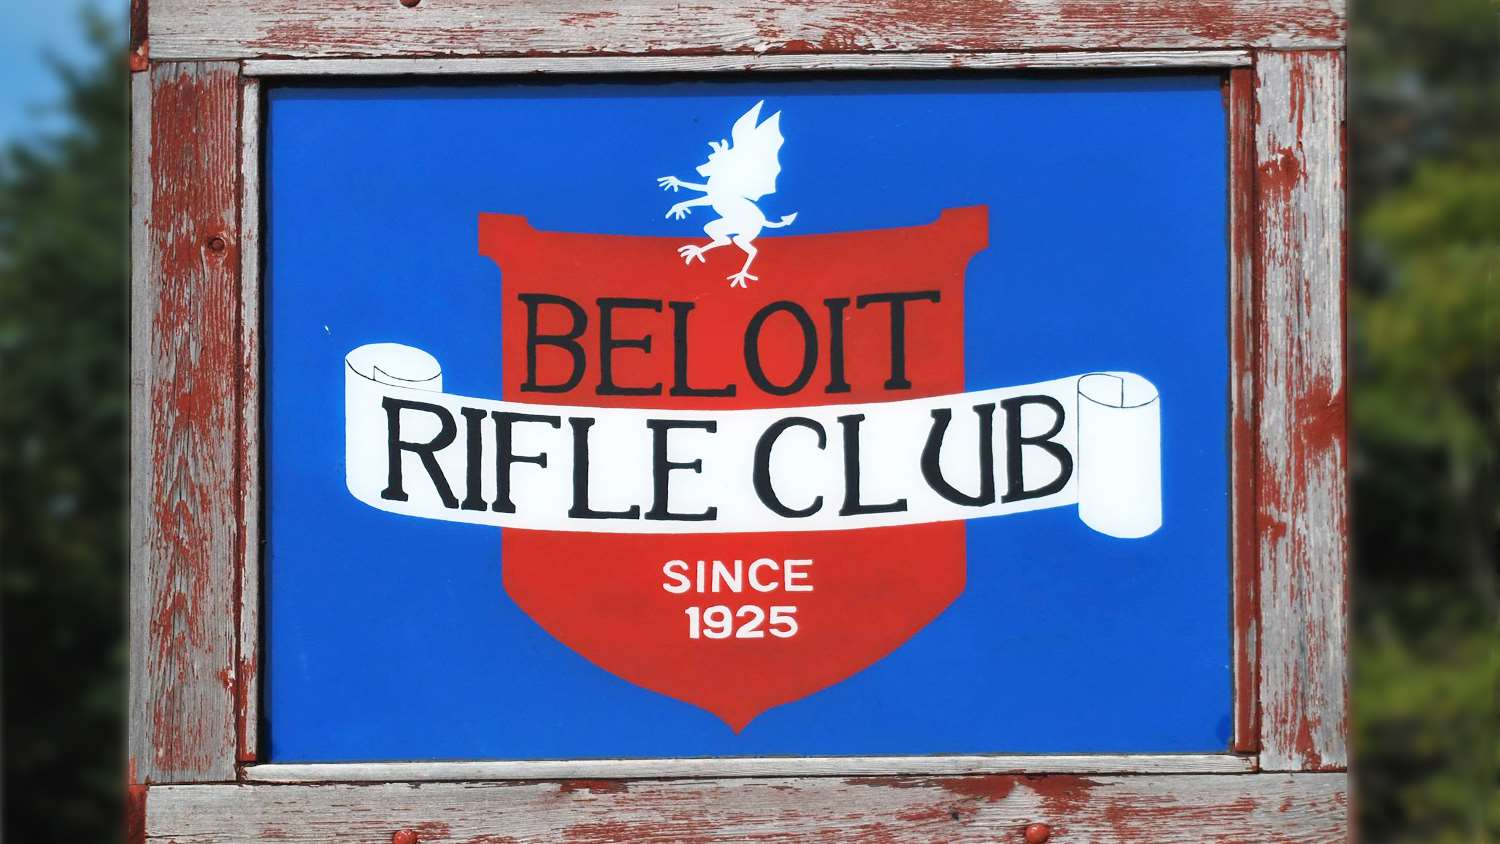 Beloit Rifle Club sign | Since 1925